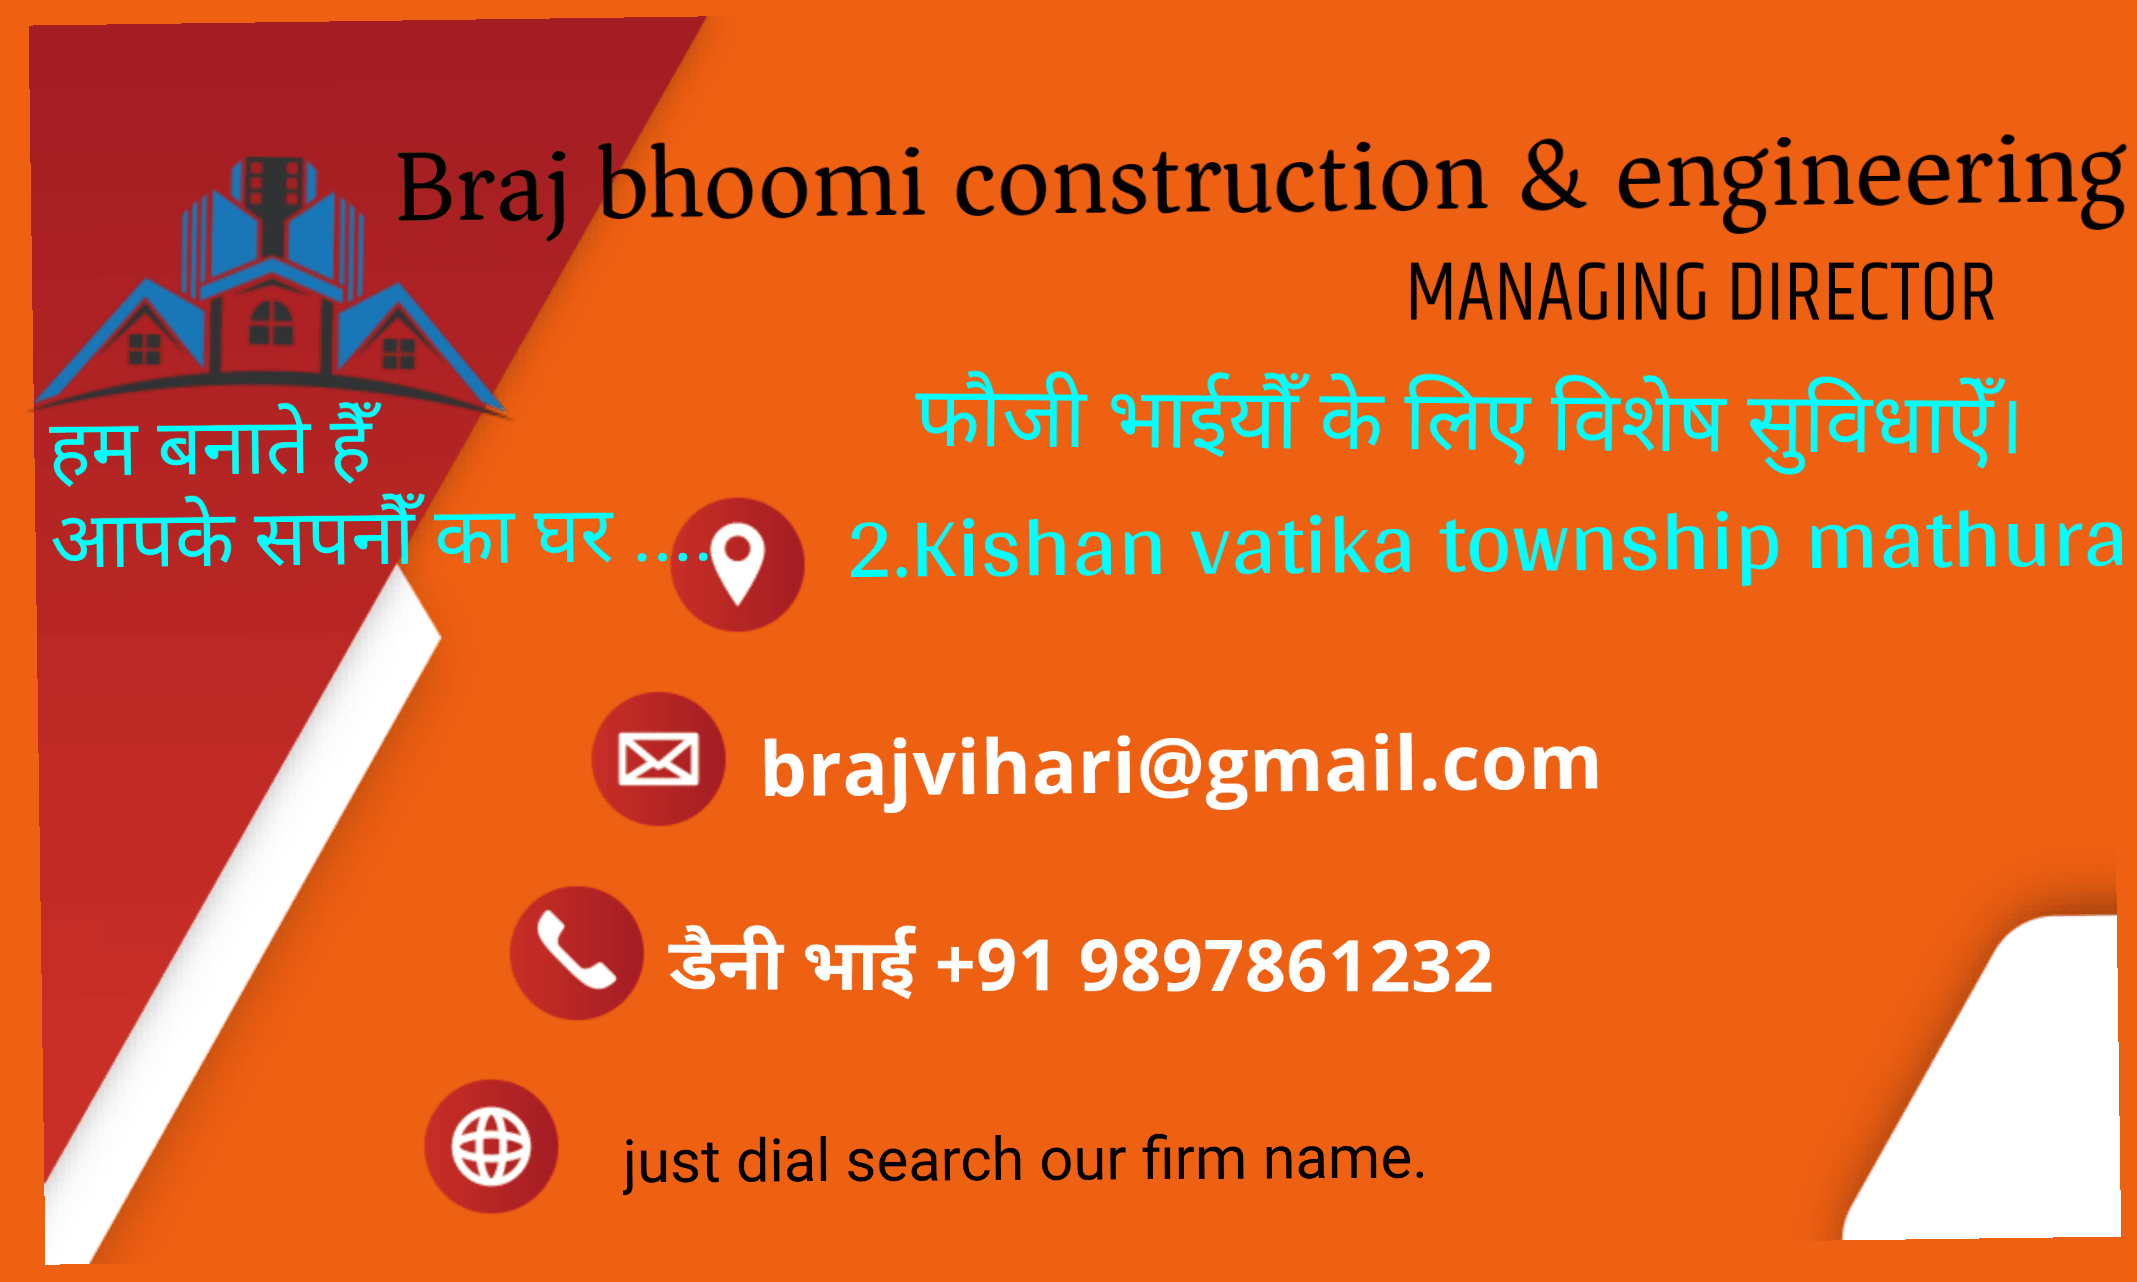 BrajBhoomi Construction